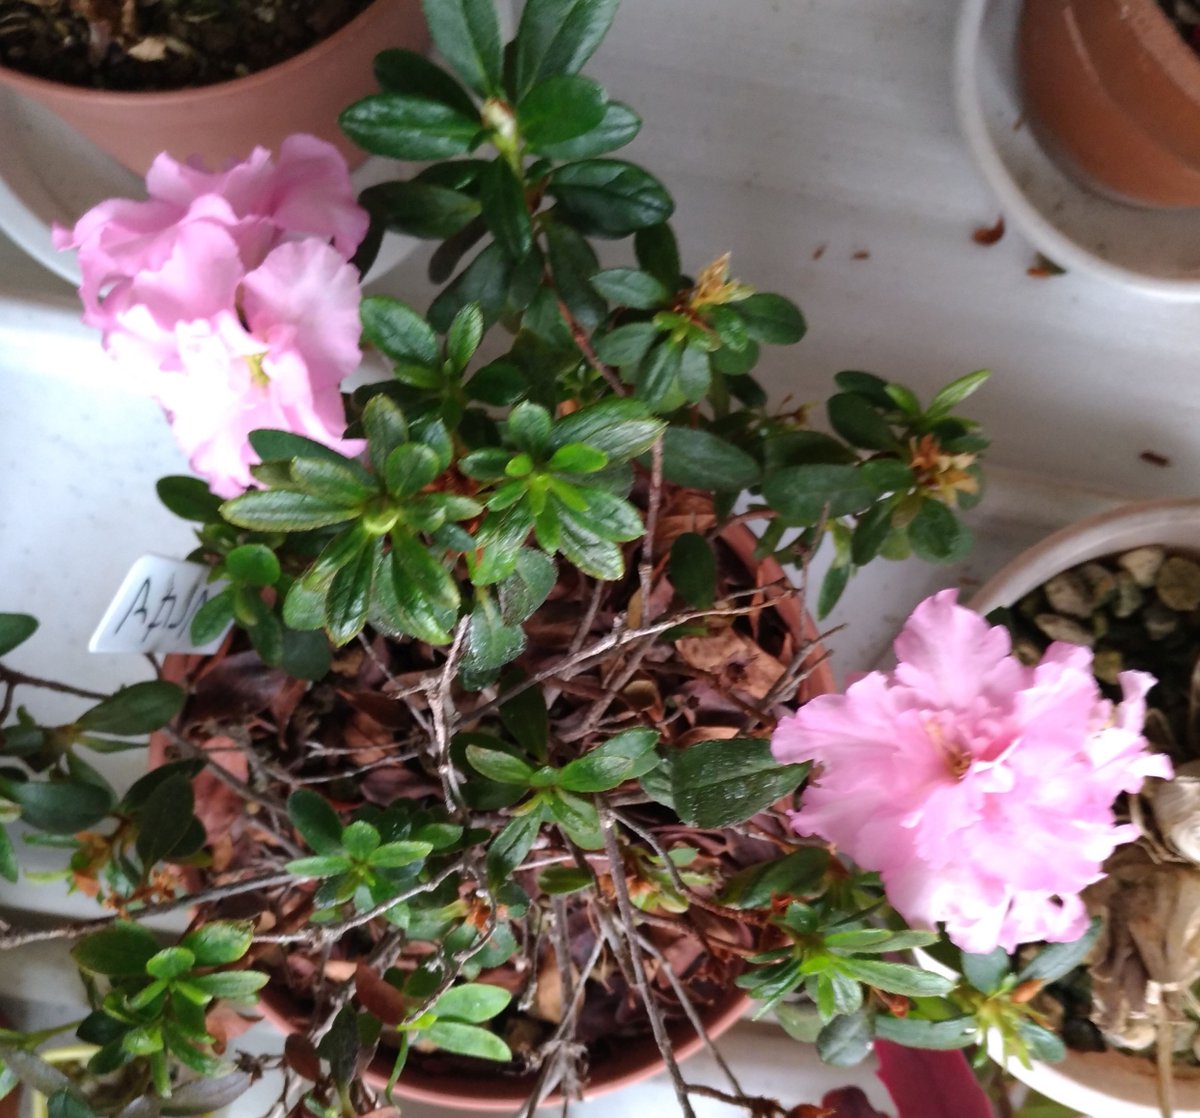 ট ইট র こころんグリーン ピンクのアザレアが優しく開いています 随分長い間咲いていますが そろそろ終わりかげんです 八重咲の花は やっぱり素敵ですね アザレア ピンク 八重咲 春 春の花 園芸品種 ツツジ科 園芸 ガーデニング 熊本市南区